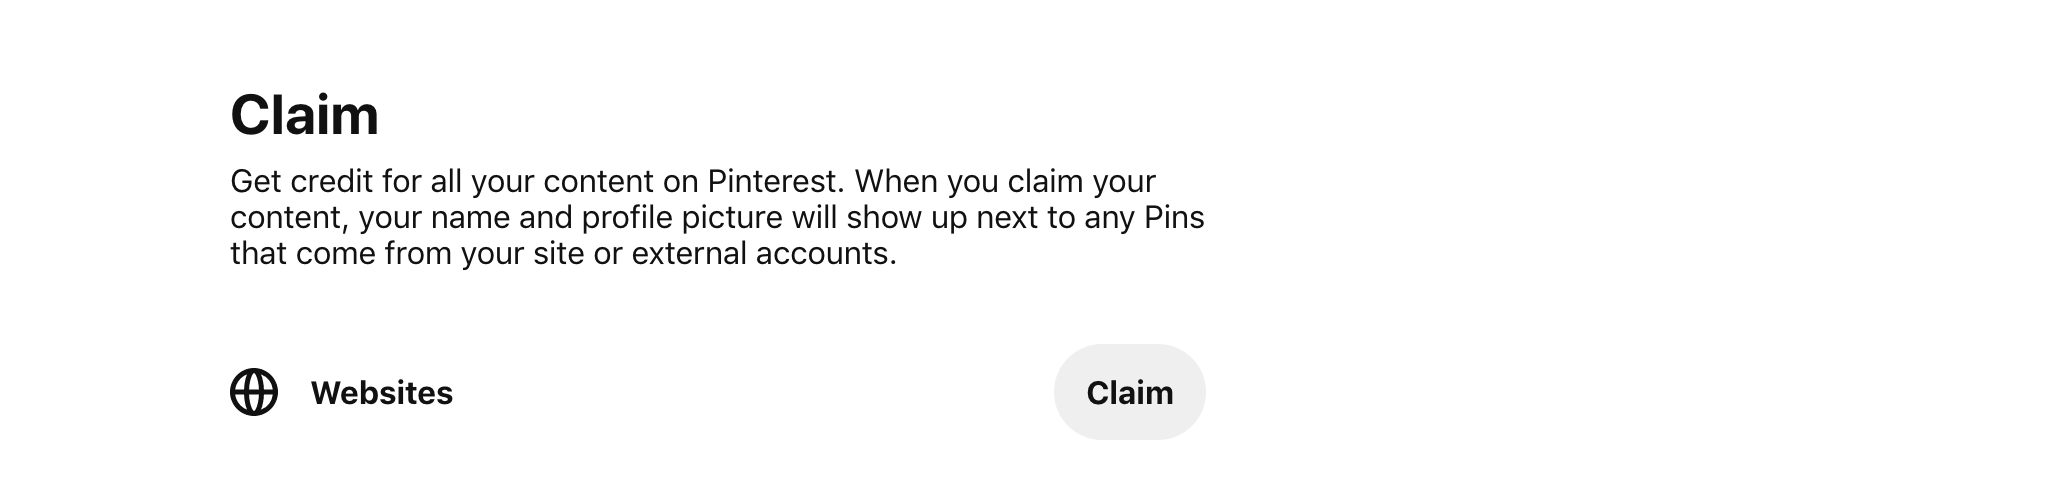 Pinterest business account claim website